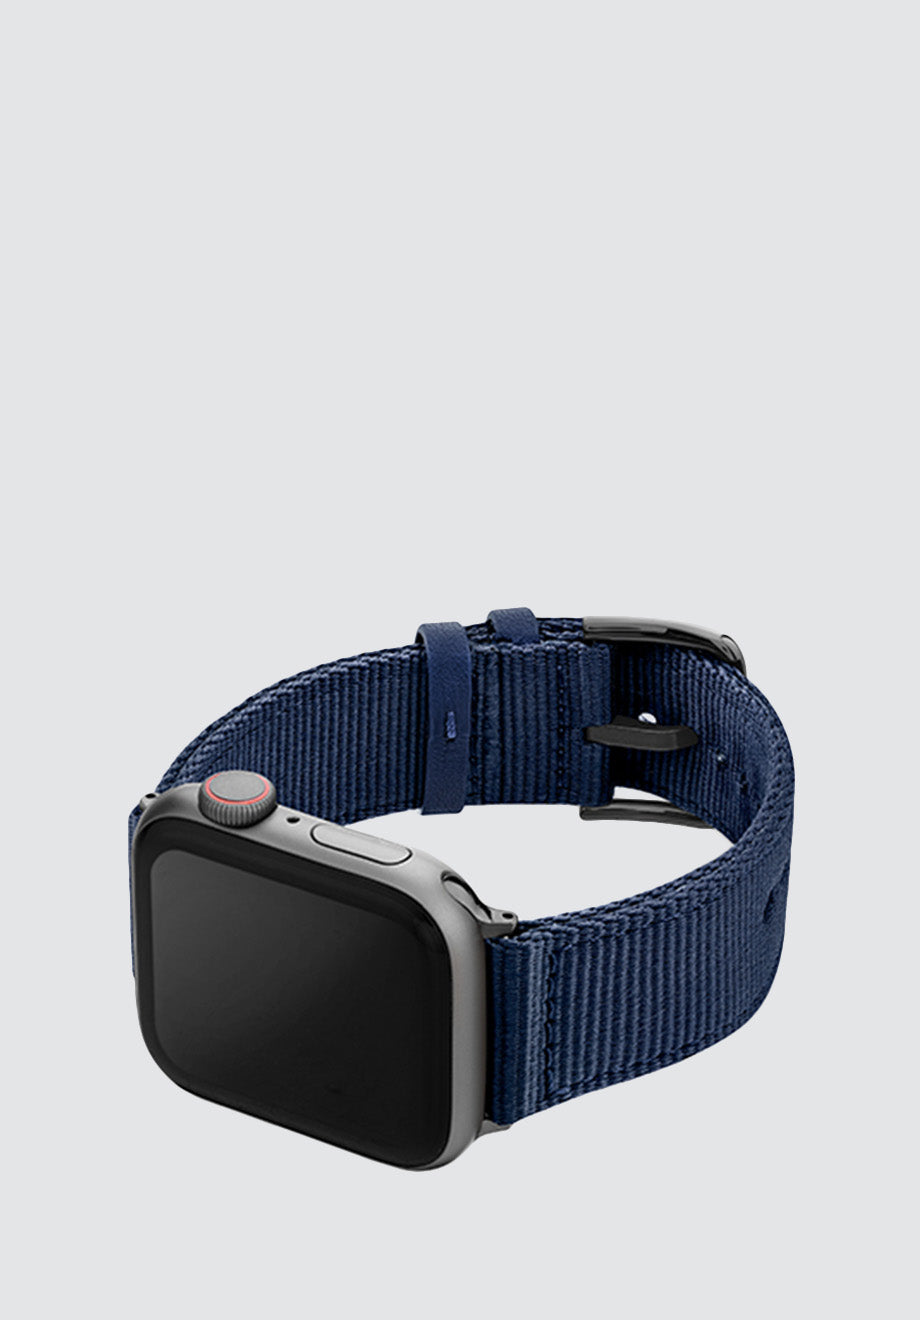 Blue Marine Apple Watch Band